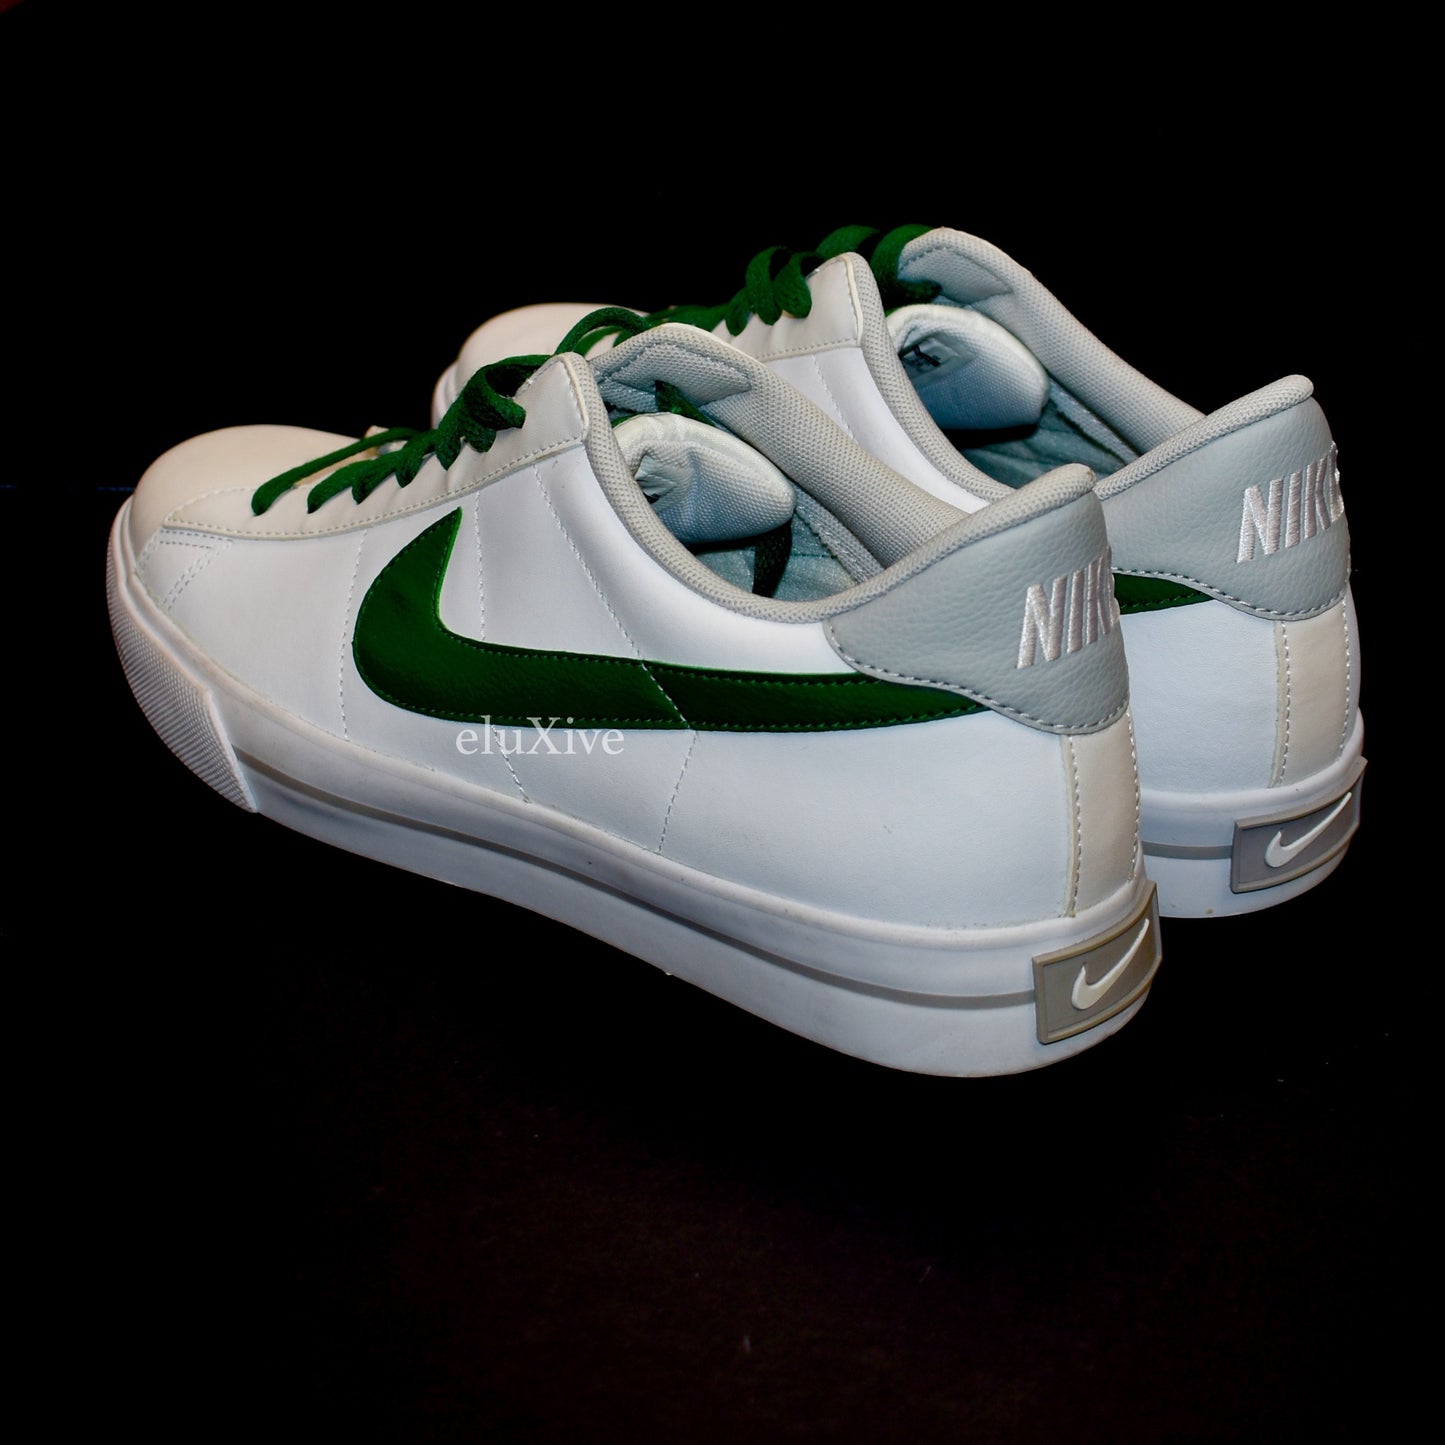 Nike - Sweet Classic Leather (White/Gorge Green)